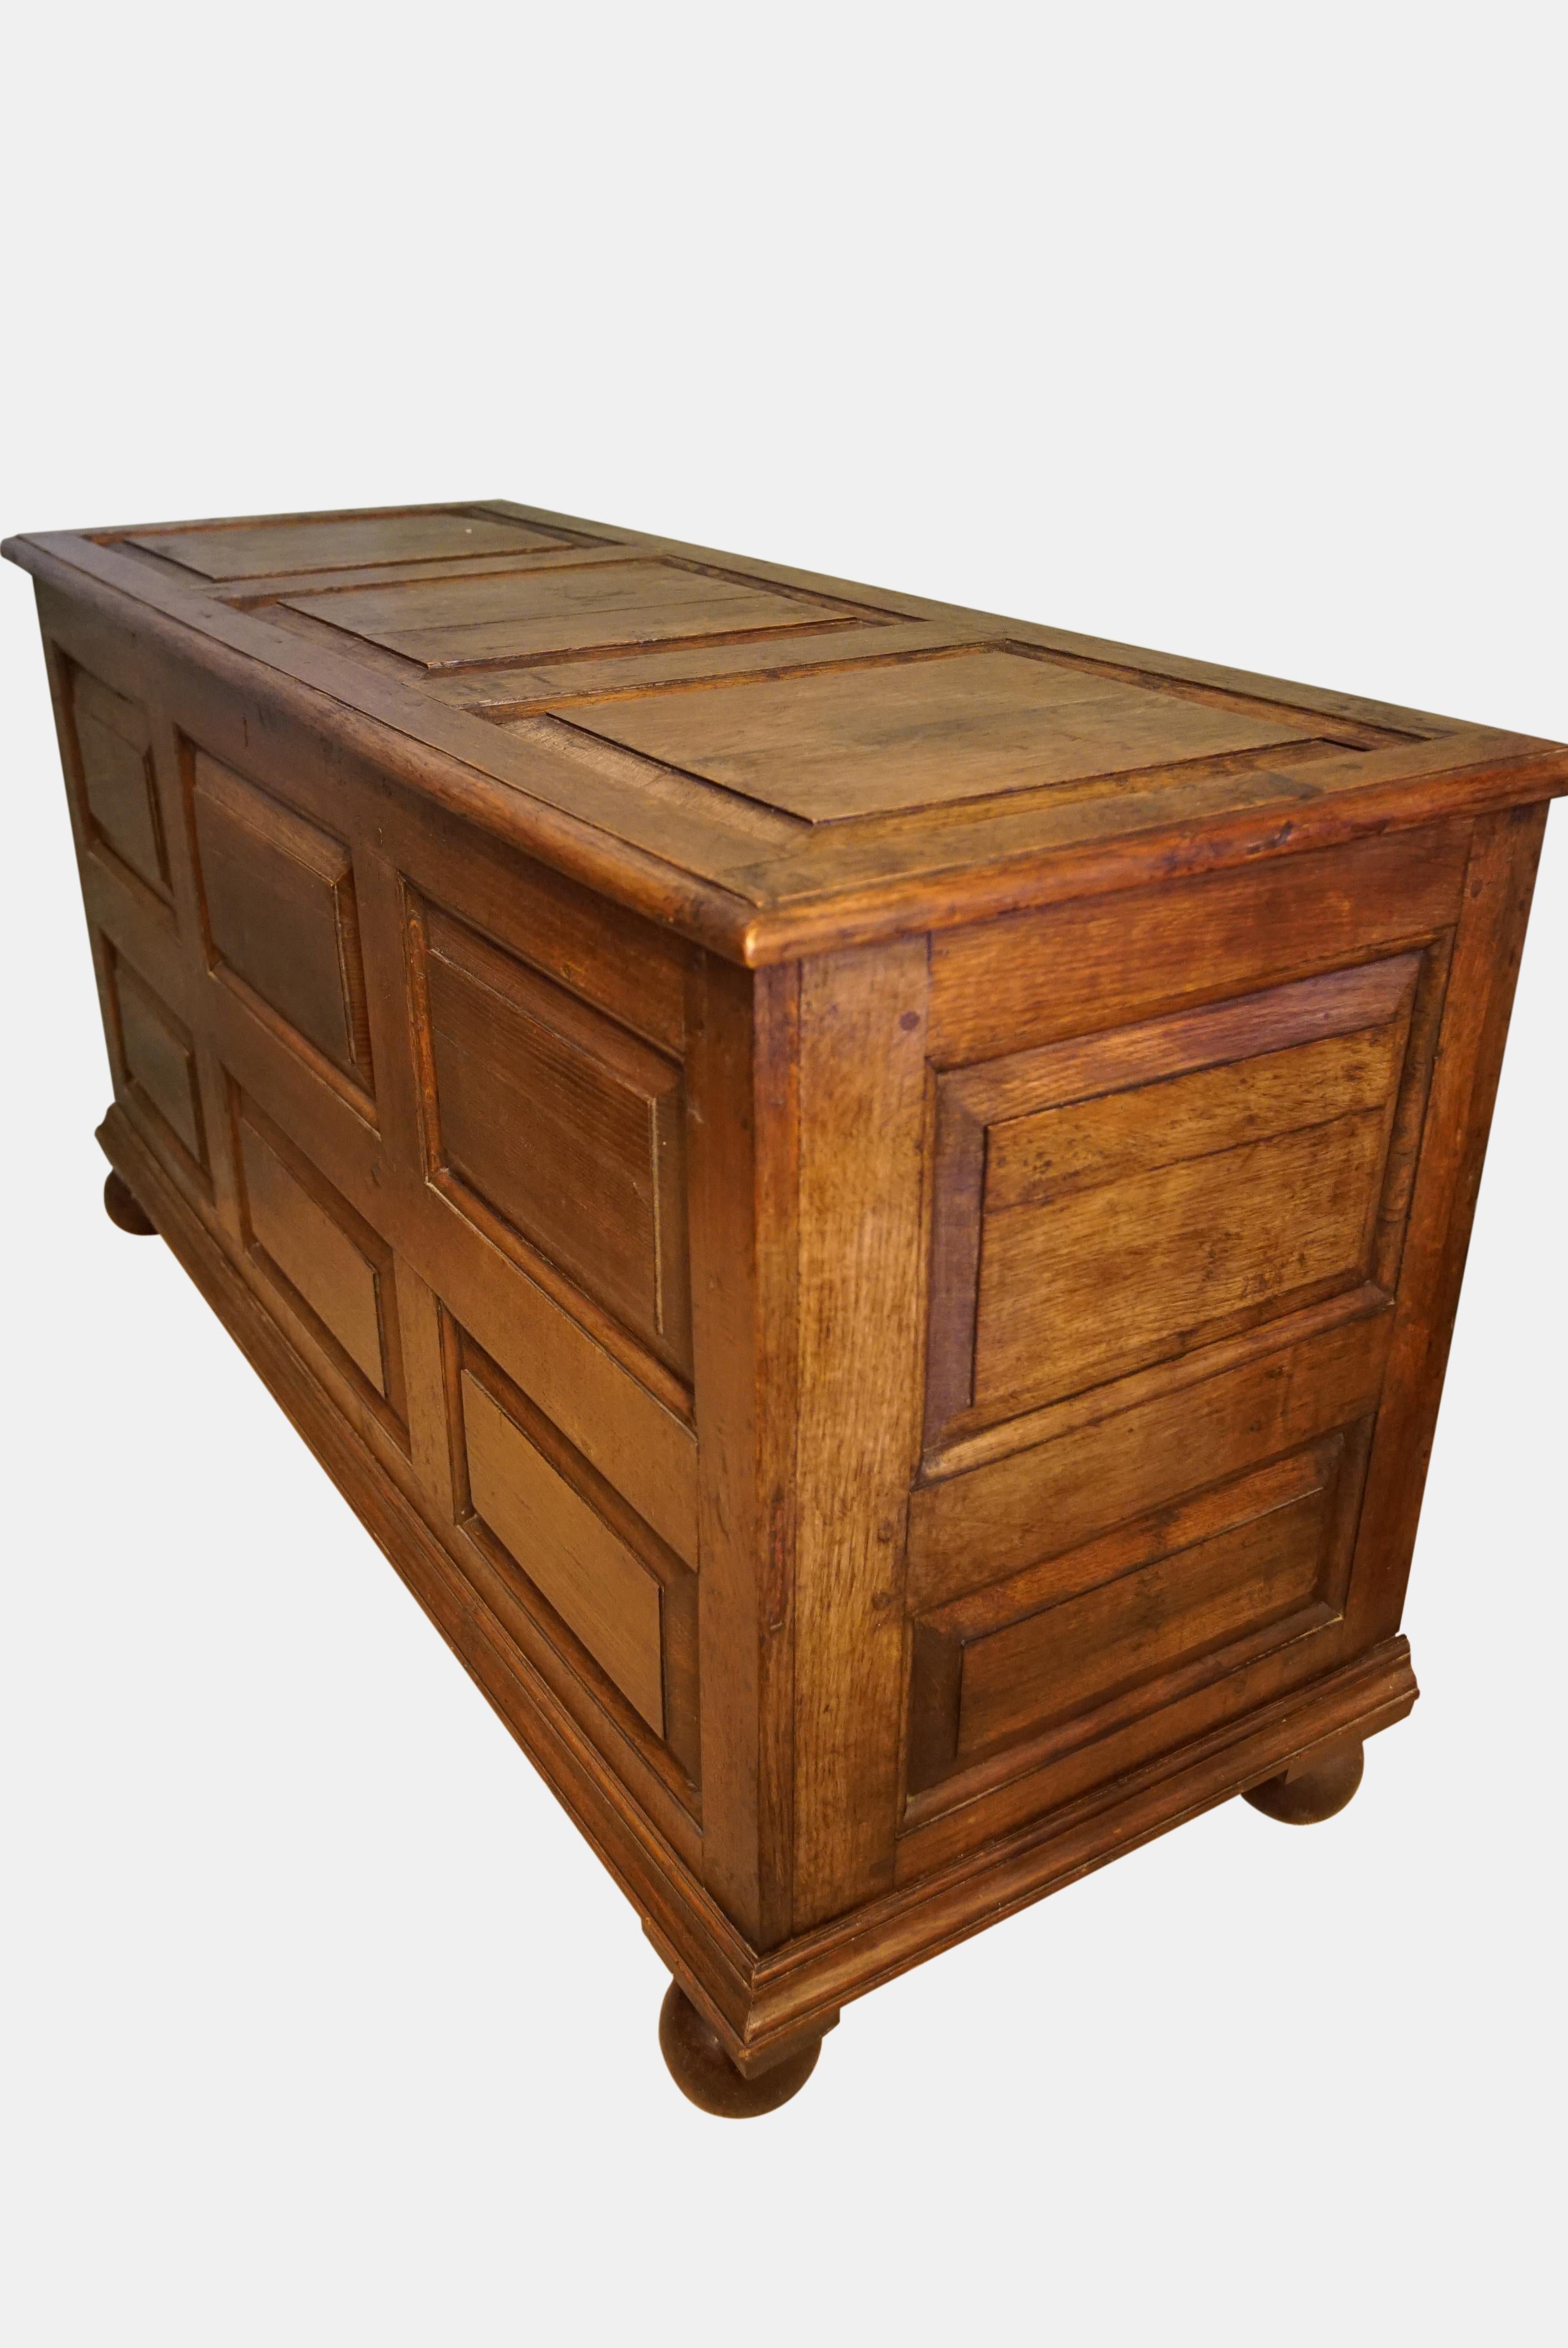 Early 18th Century Oak Coffer For Sale 1